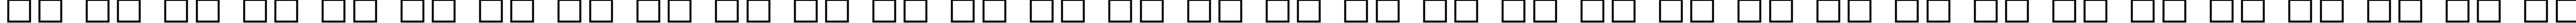 Пример написания русского алфавита шрифтом KidTYPEPaint